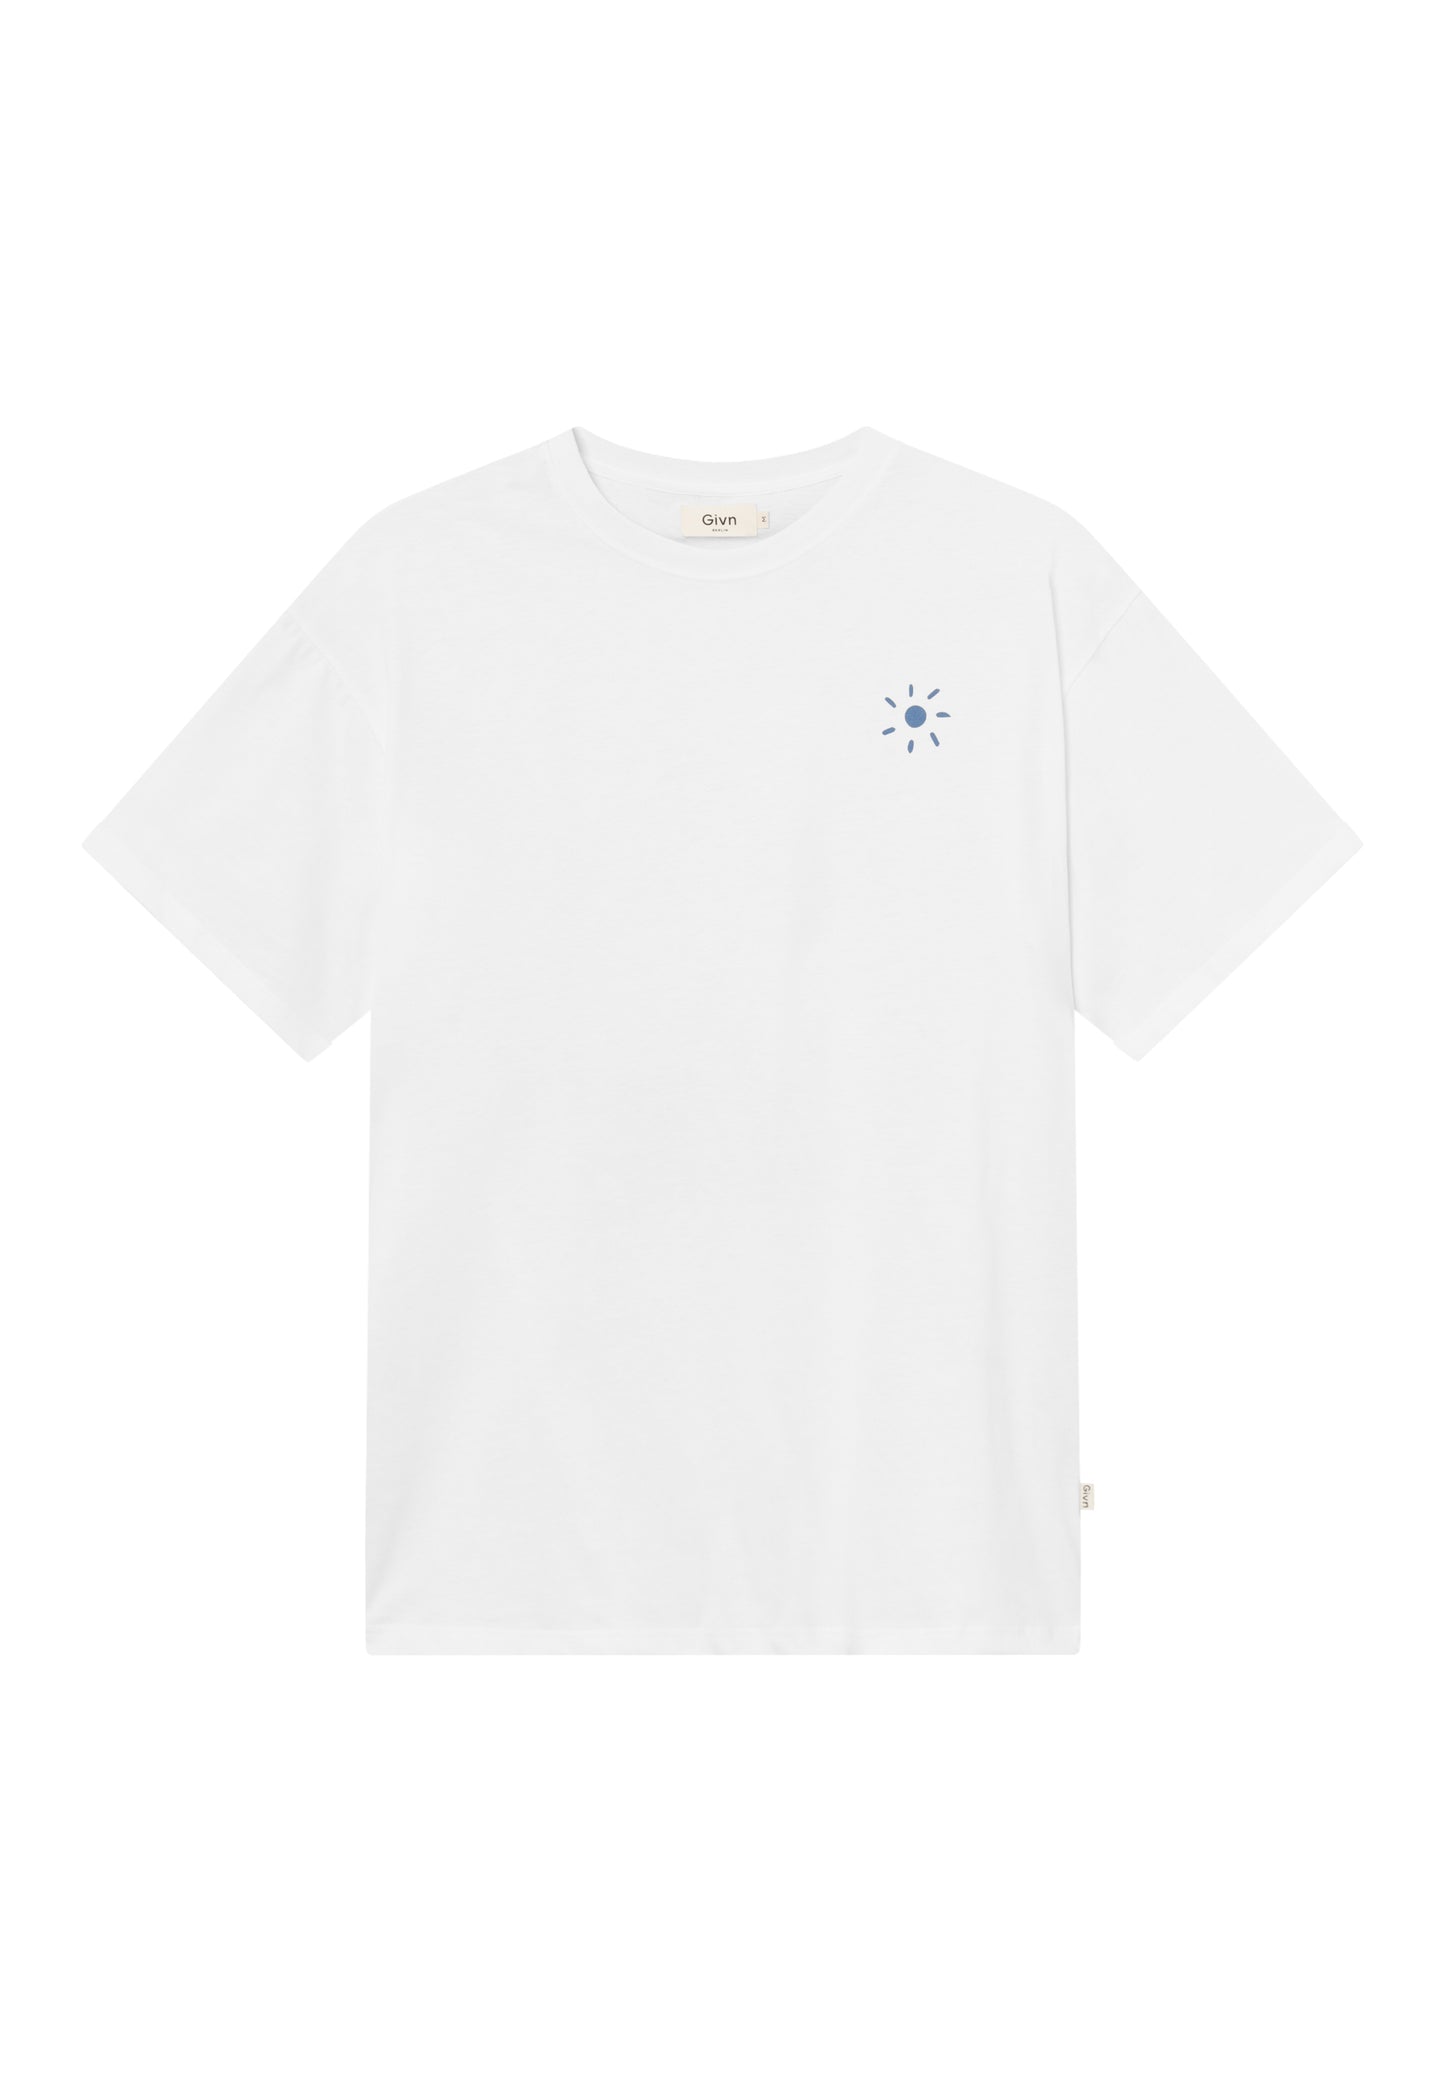 Givn - Cliff (Sun) T-Shirt White